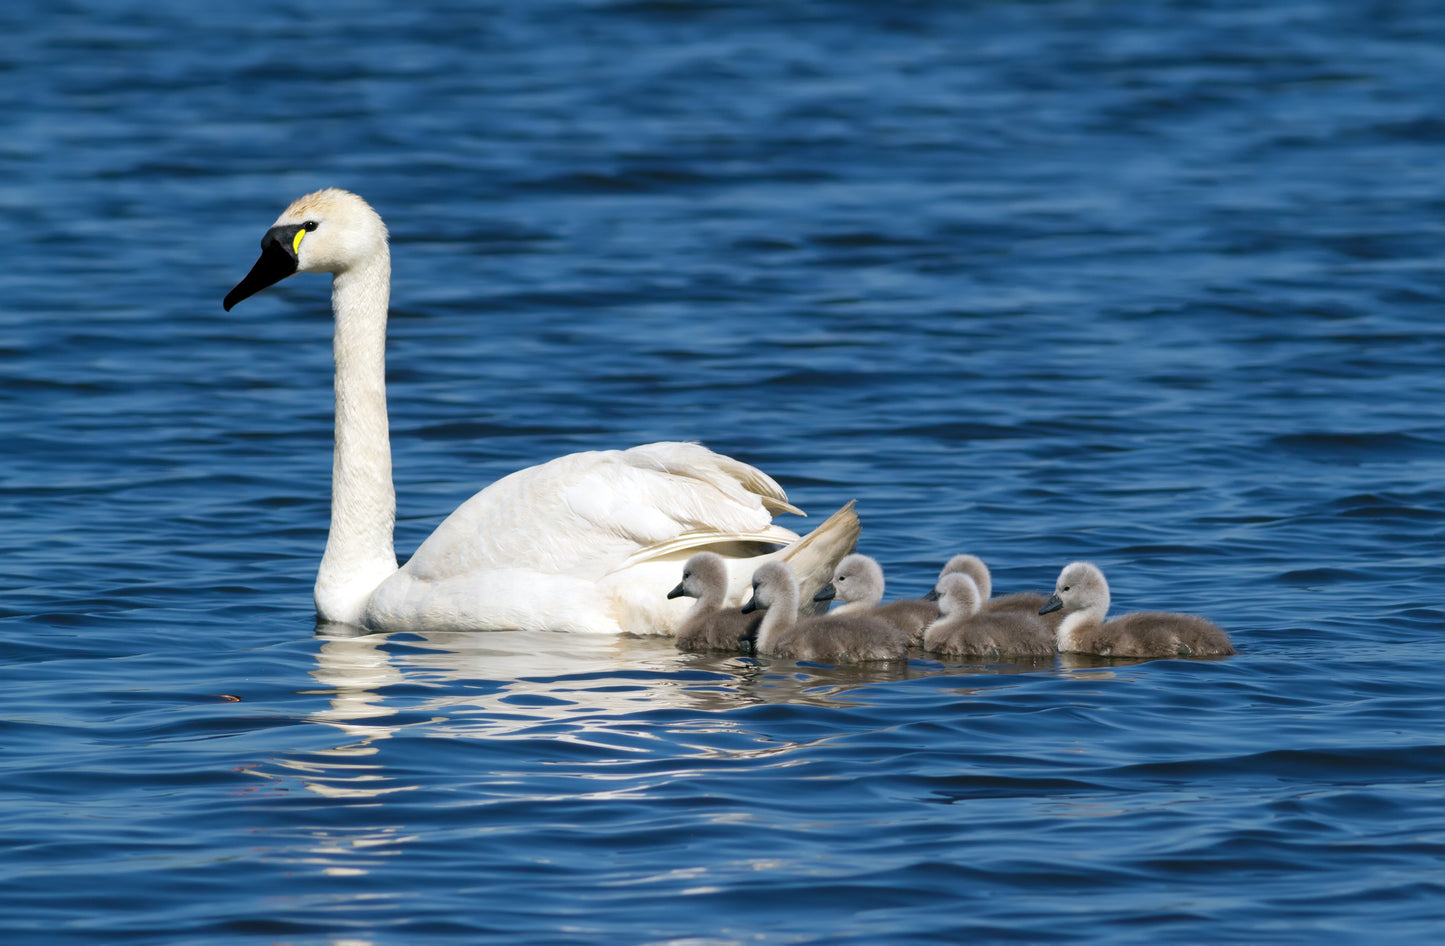 Mama swan and babies